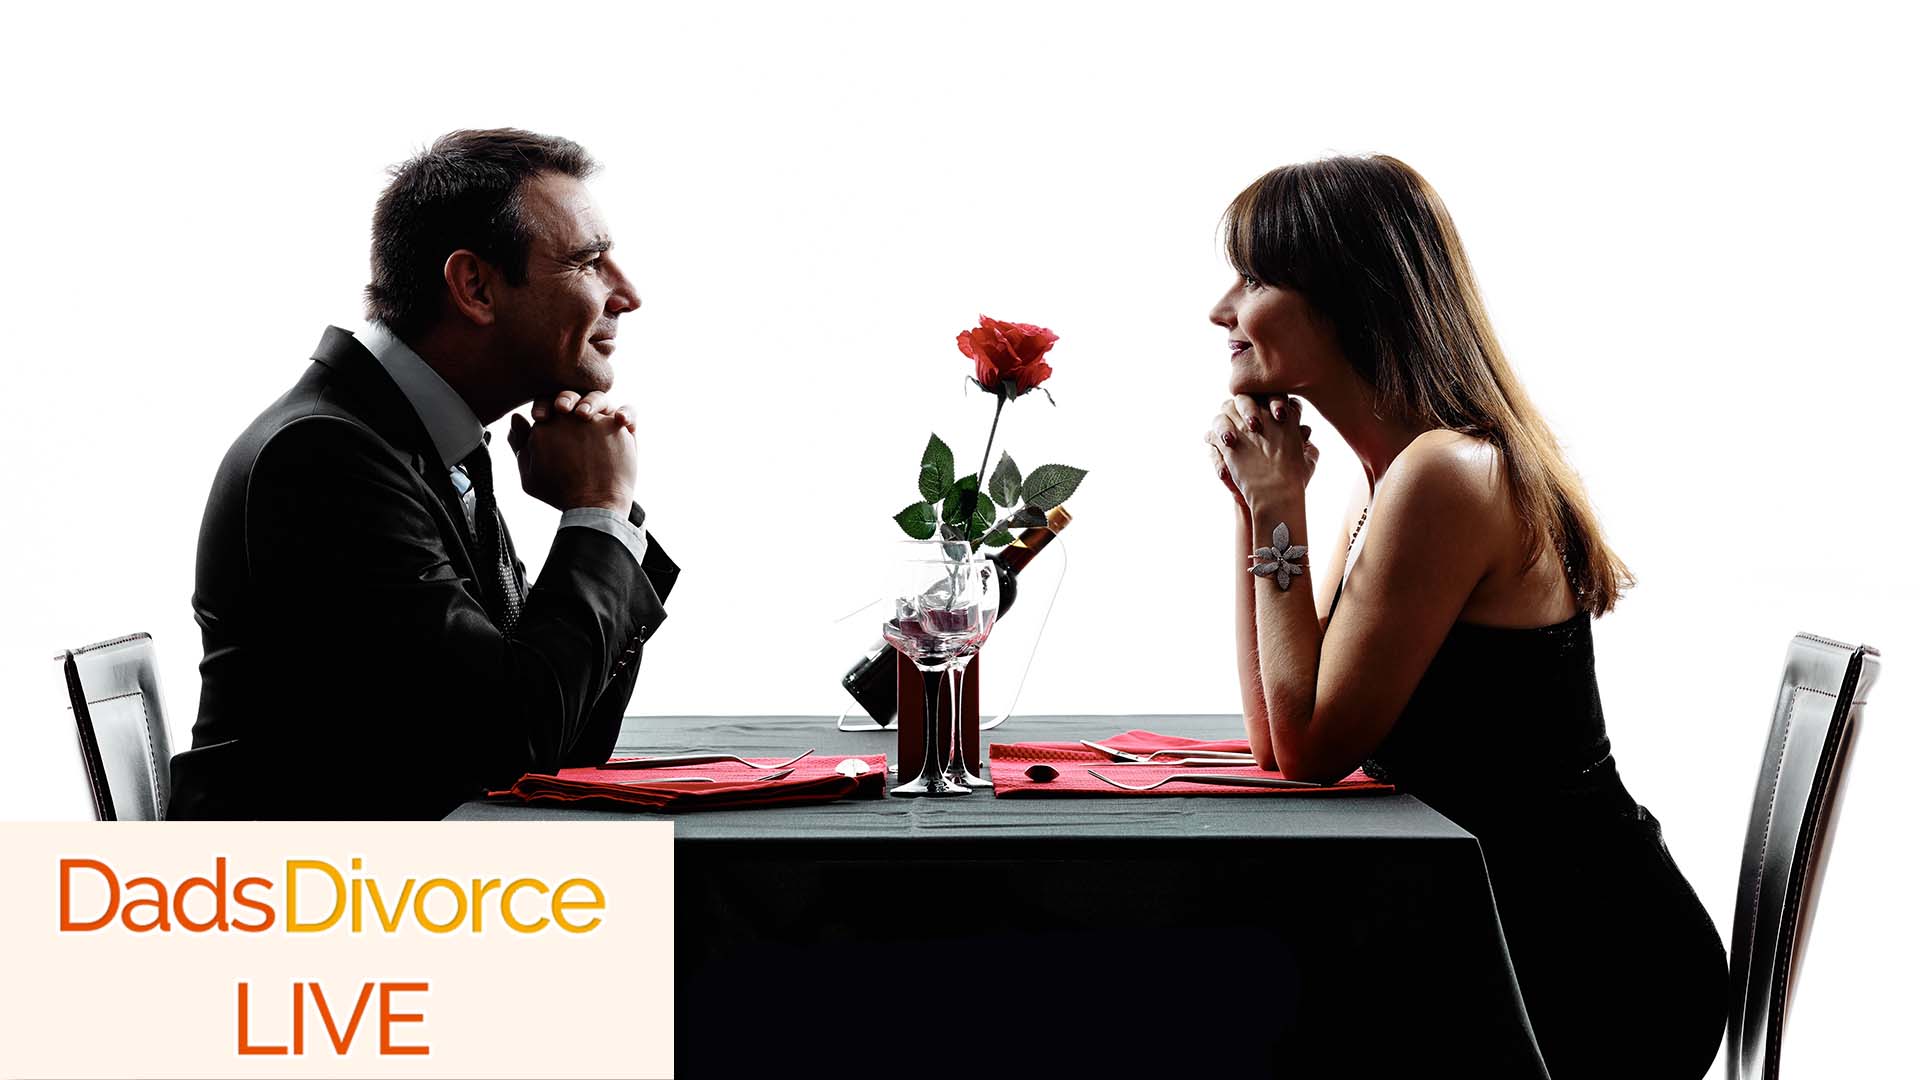 Divorce mediator and Divorce 2 Dating founder Sheila Blagg gives tips for d...